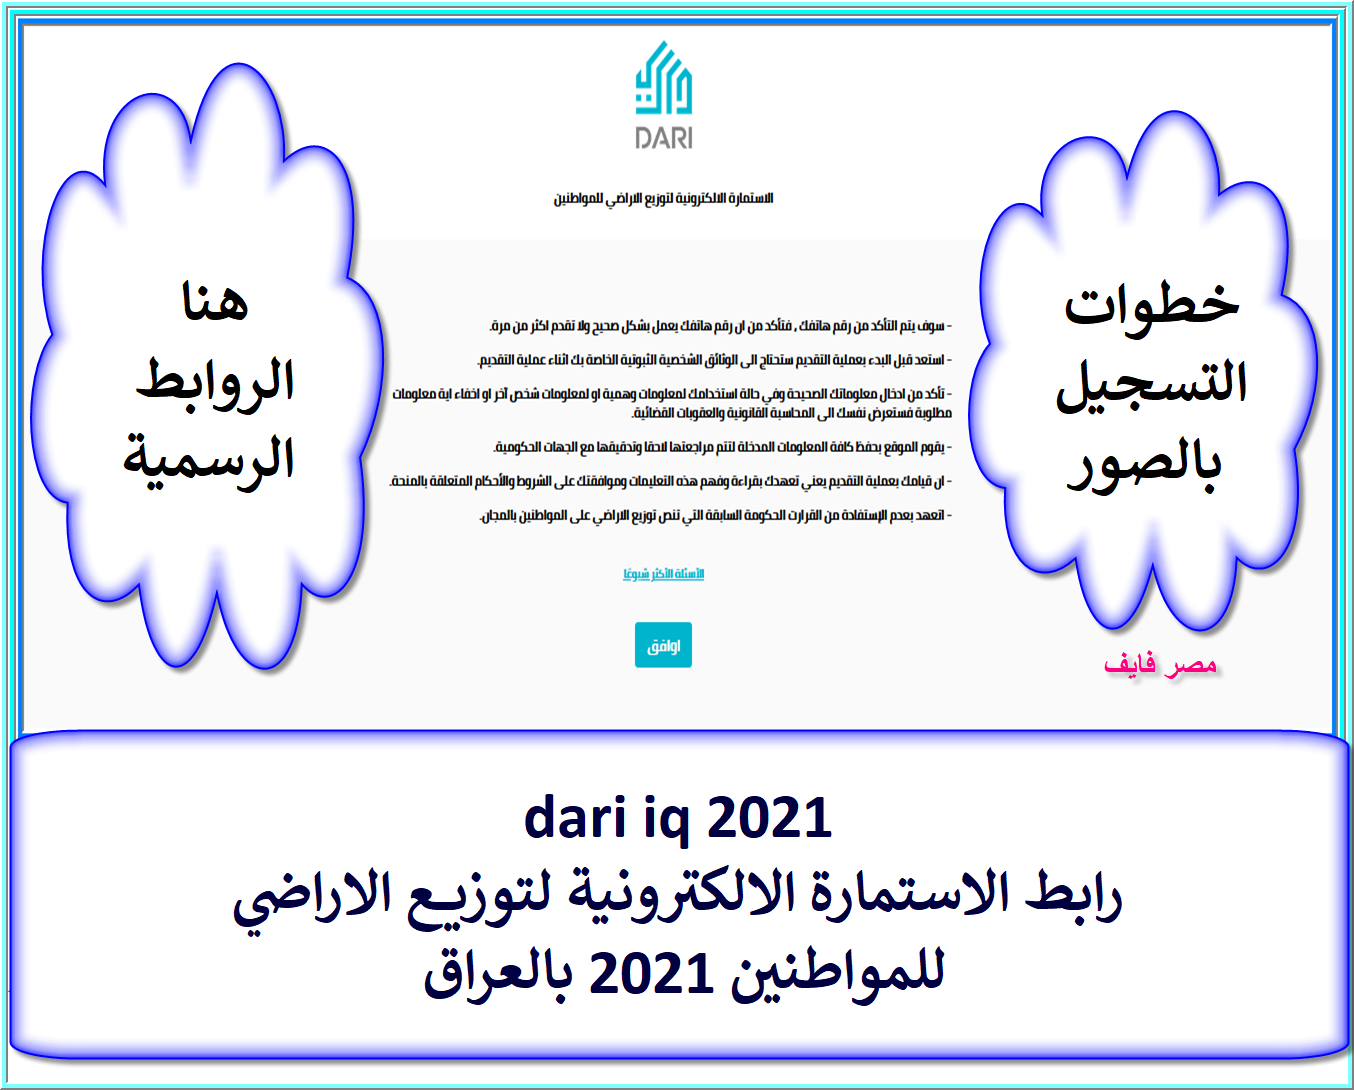 dari iq 2021 رابط الاستمارة الإلكترونية لتوزيع الأراضي للمواطنين 2021 بالعراق الخطوات والروابط الرسمية